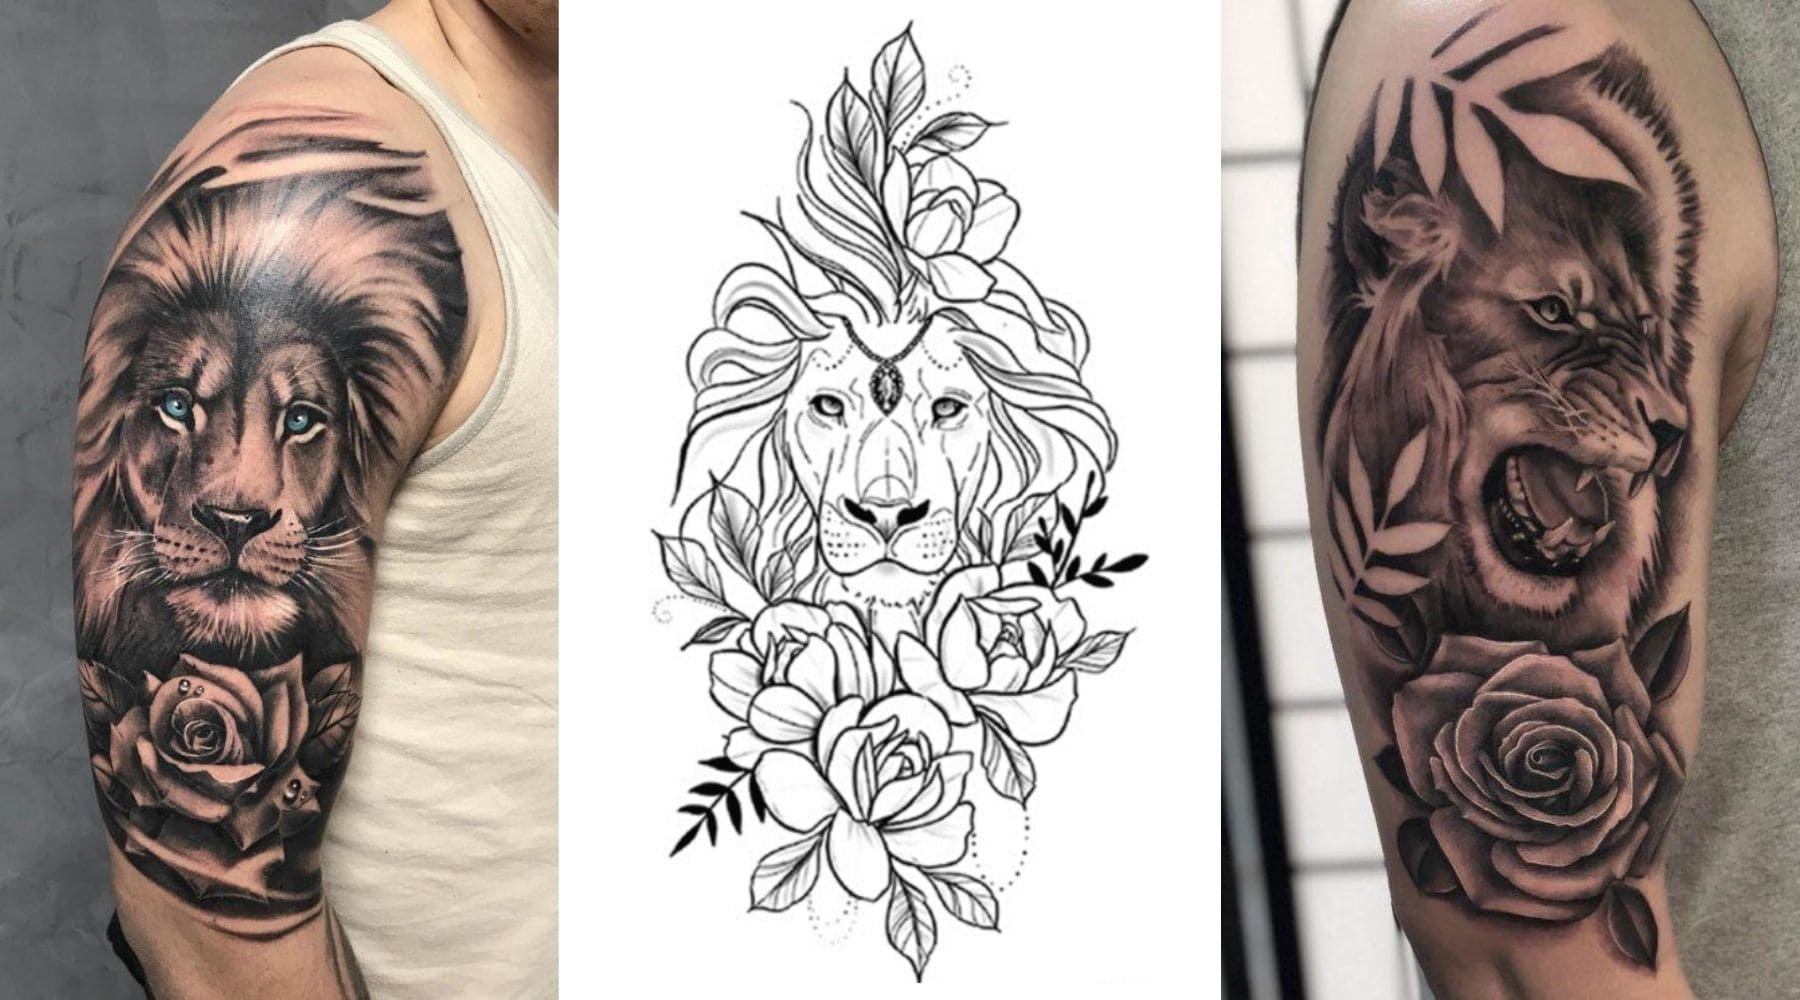 Tatouage lion et rose.